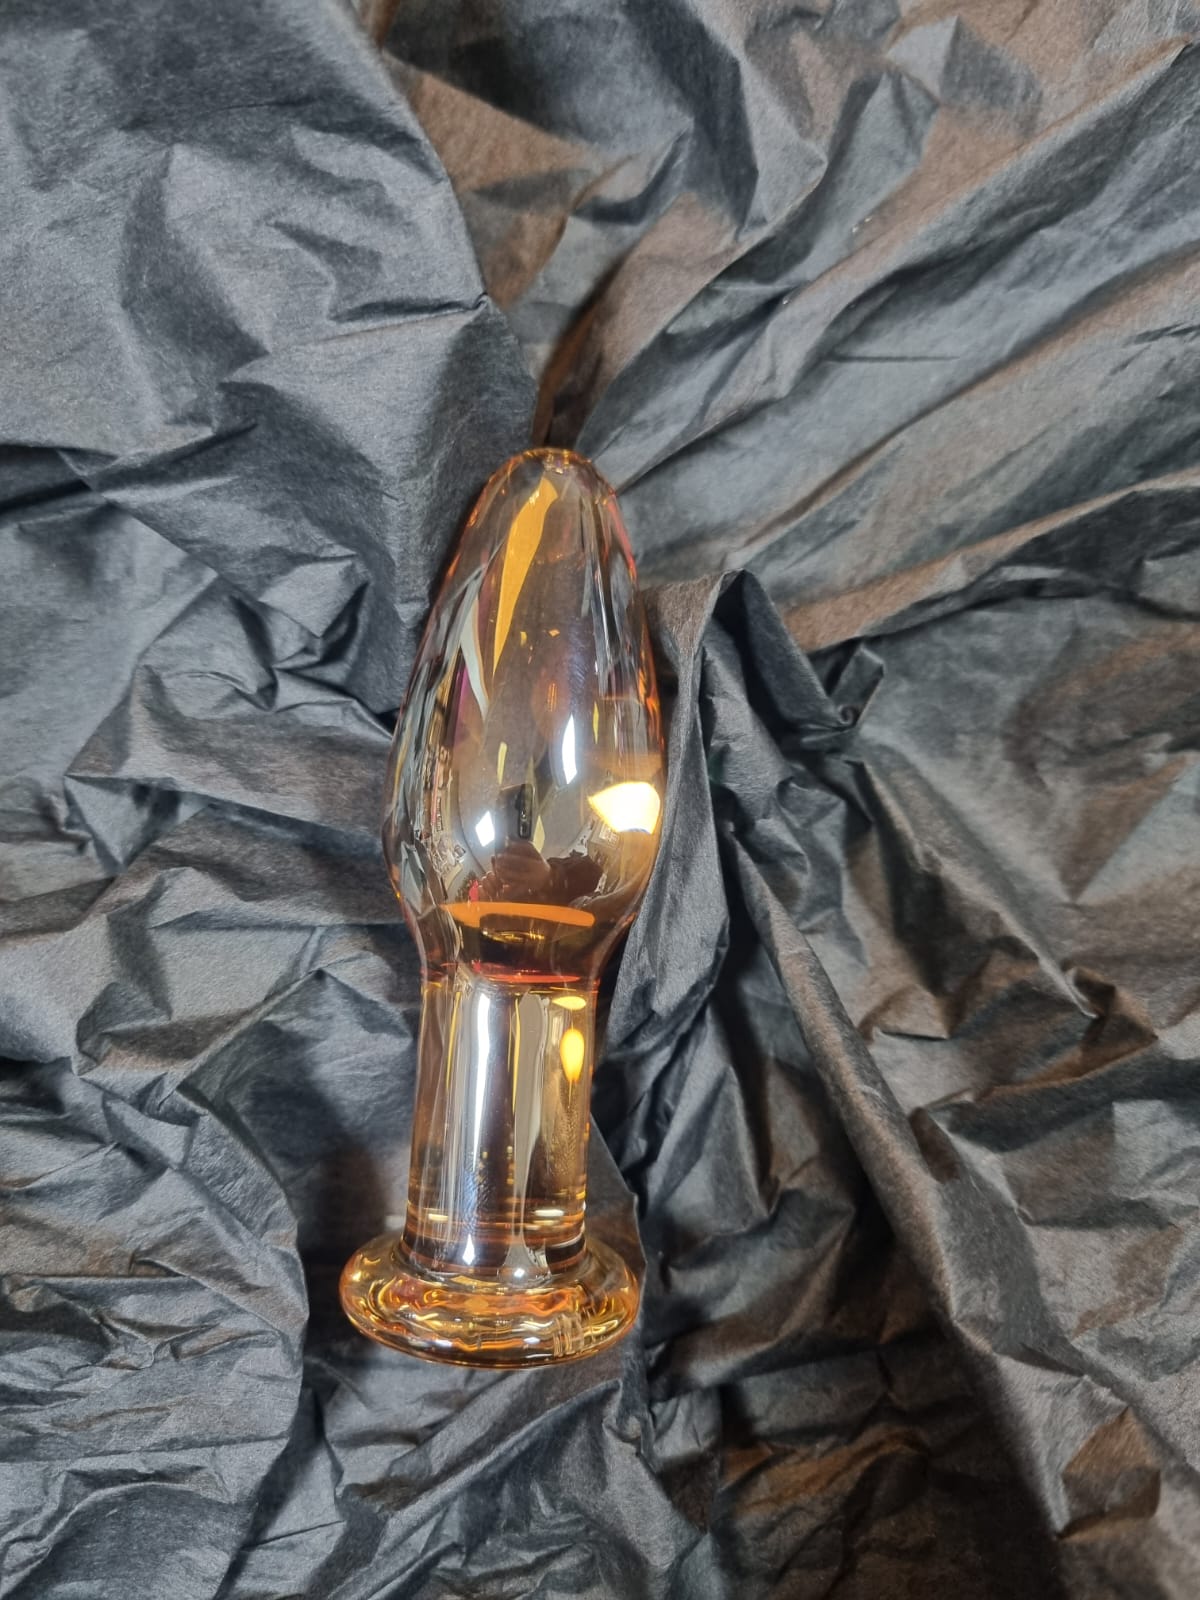 4" Analplug aus Pyrexglas von LynxSecret